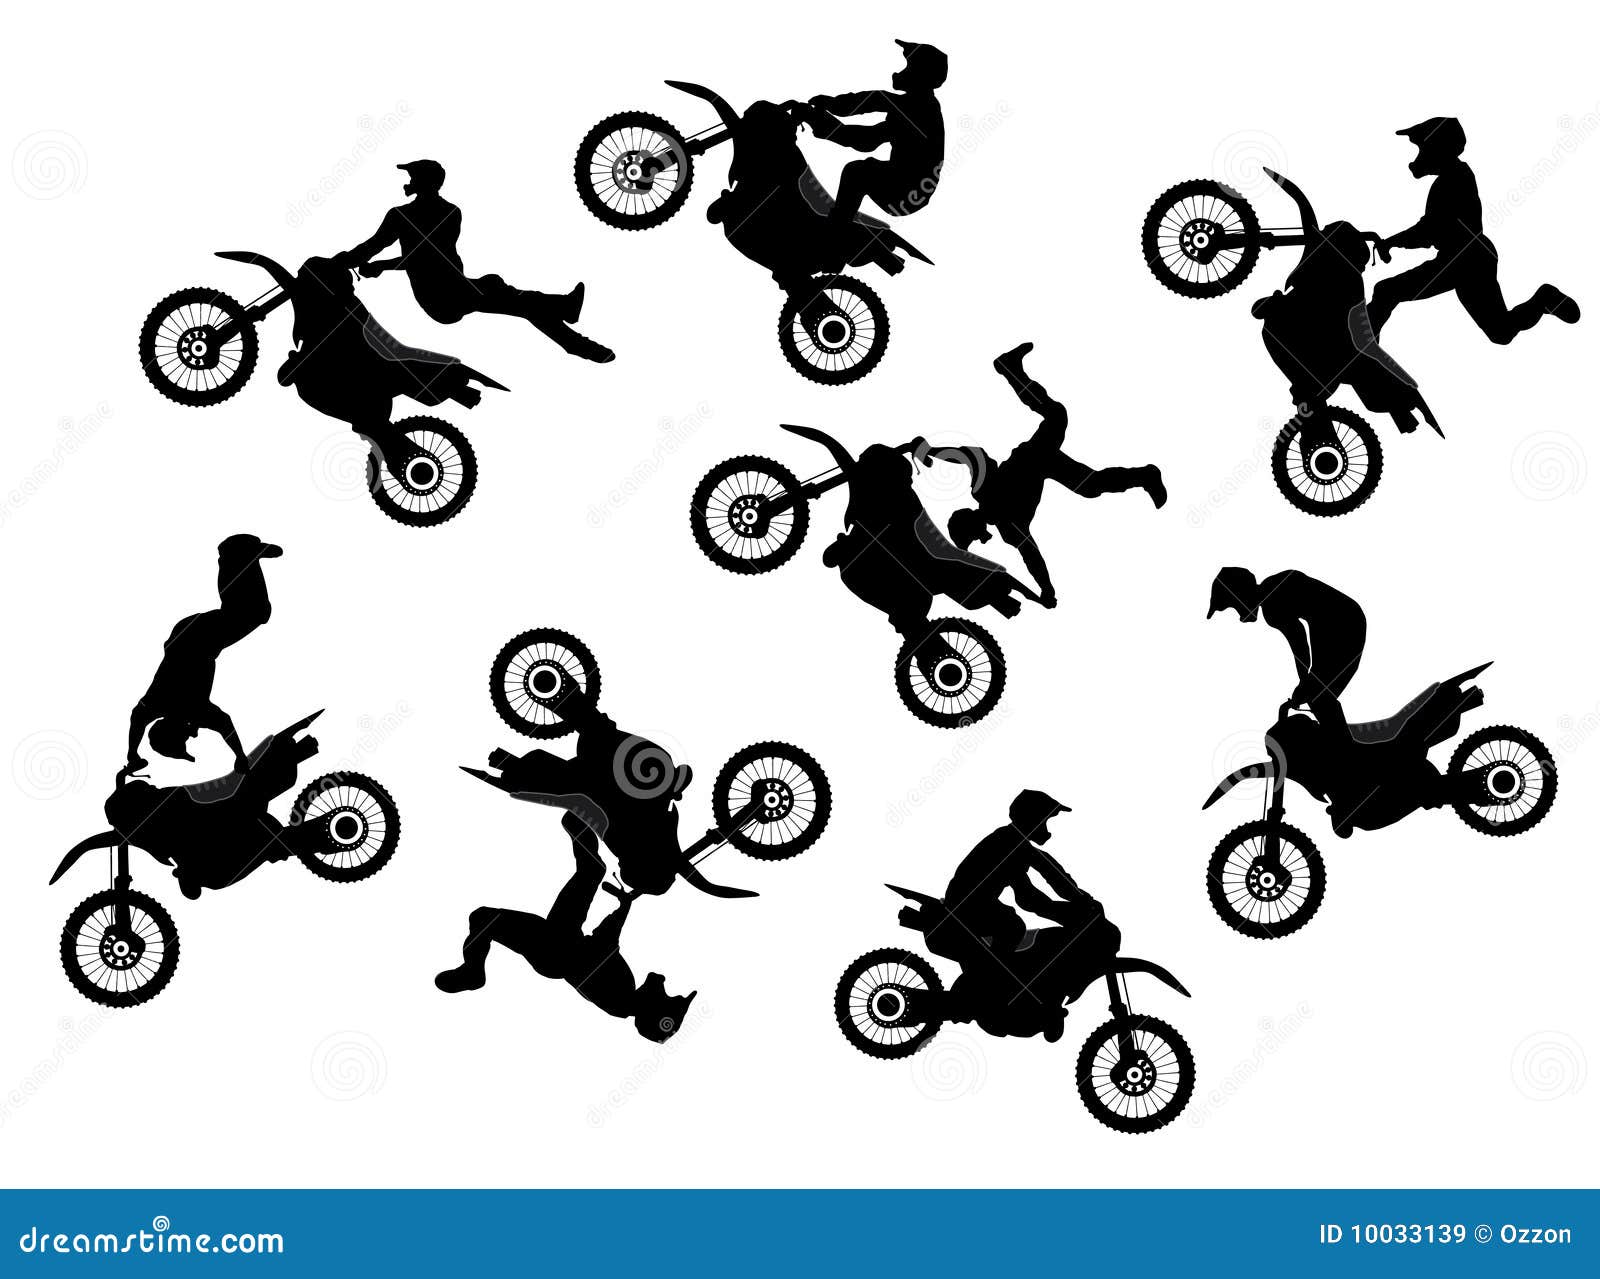 free vector clipart motocross - photo #19